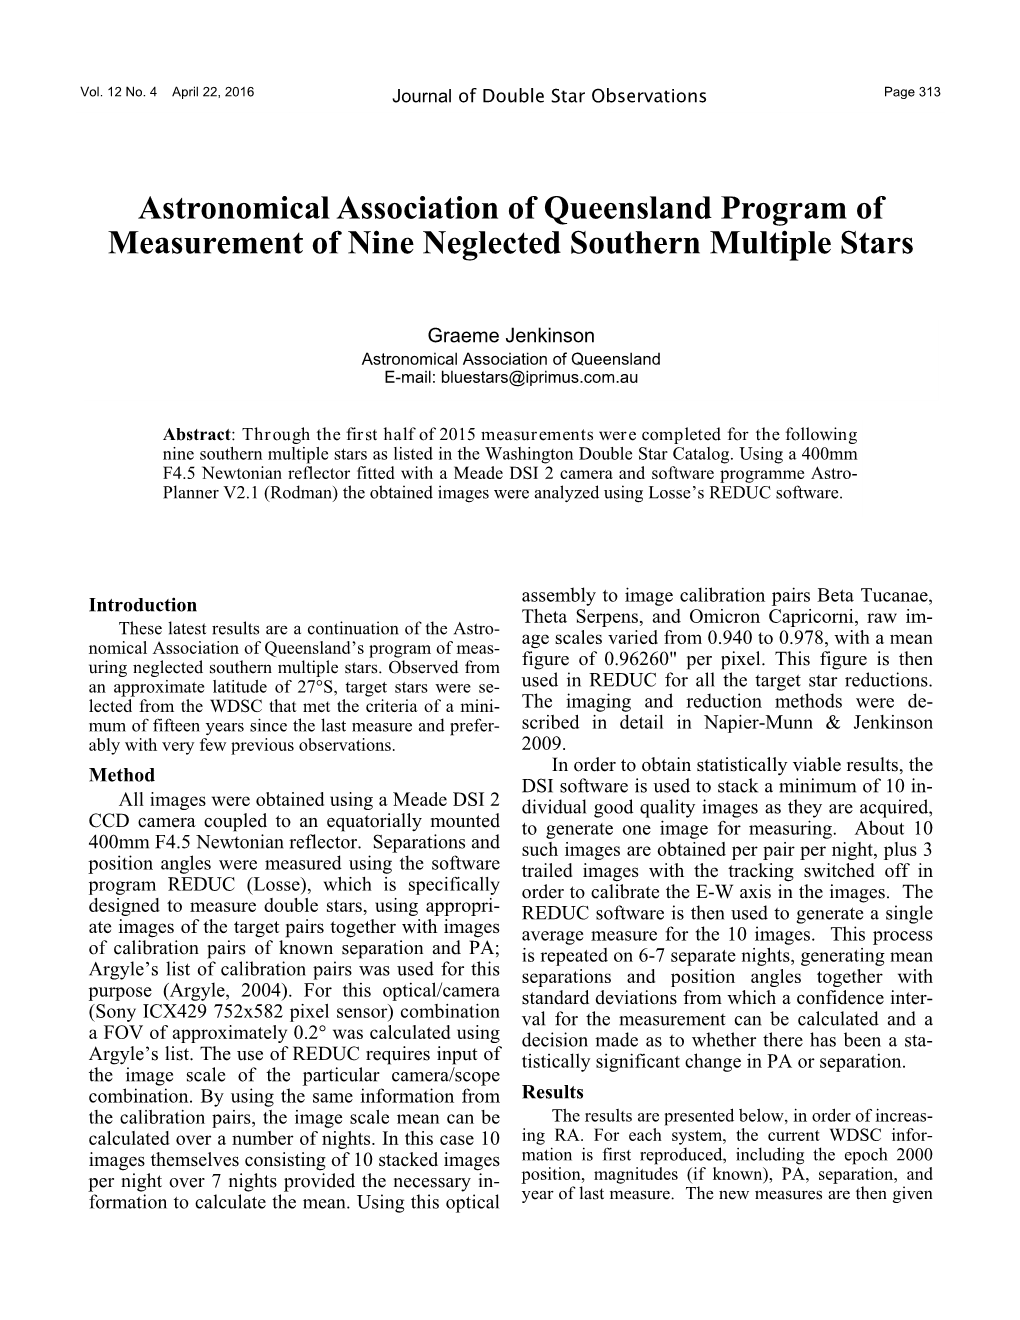 Astronomical Association of Queensland Program of Measurement of Nine Neglected Southern Multiple Stars